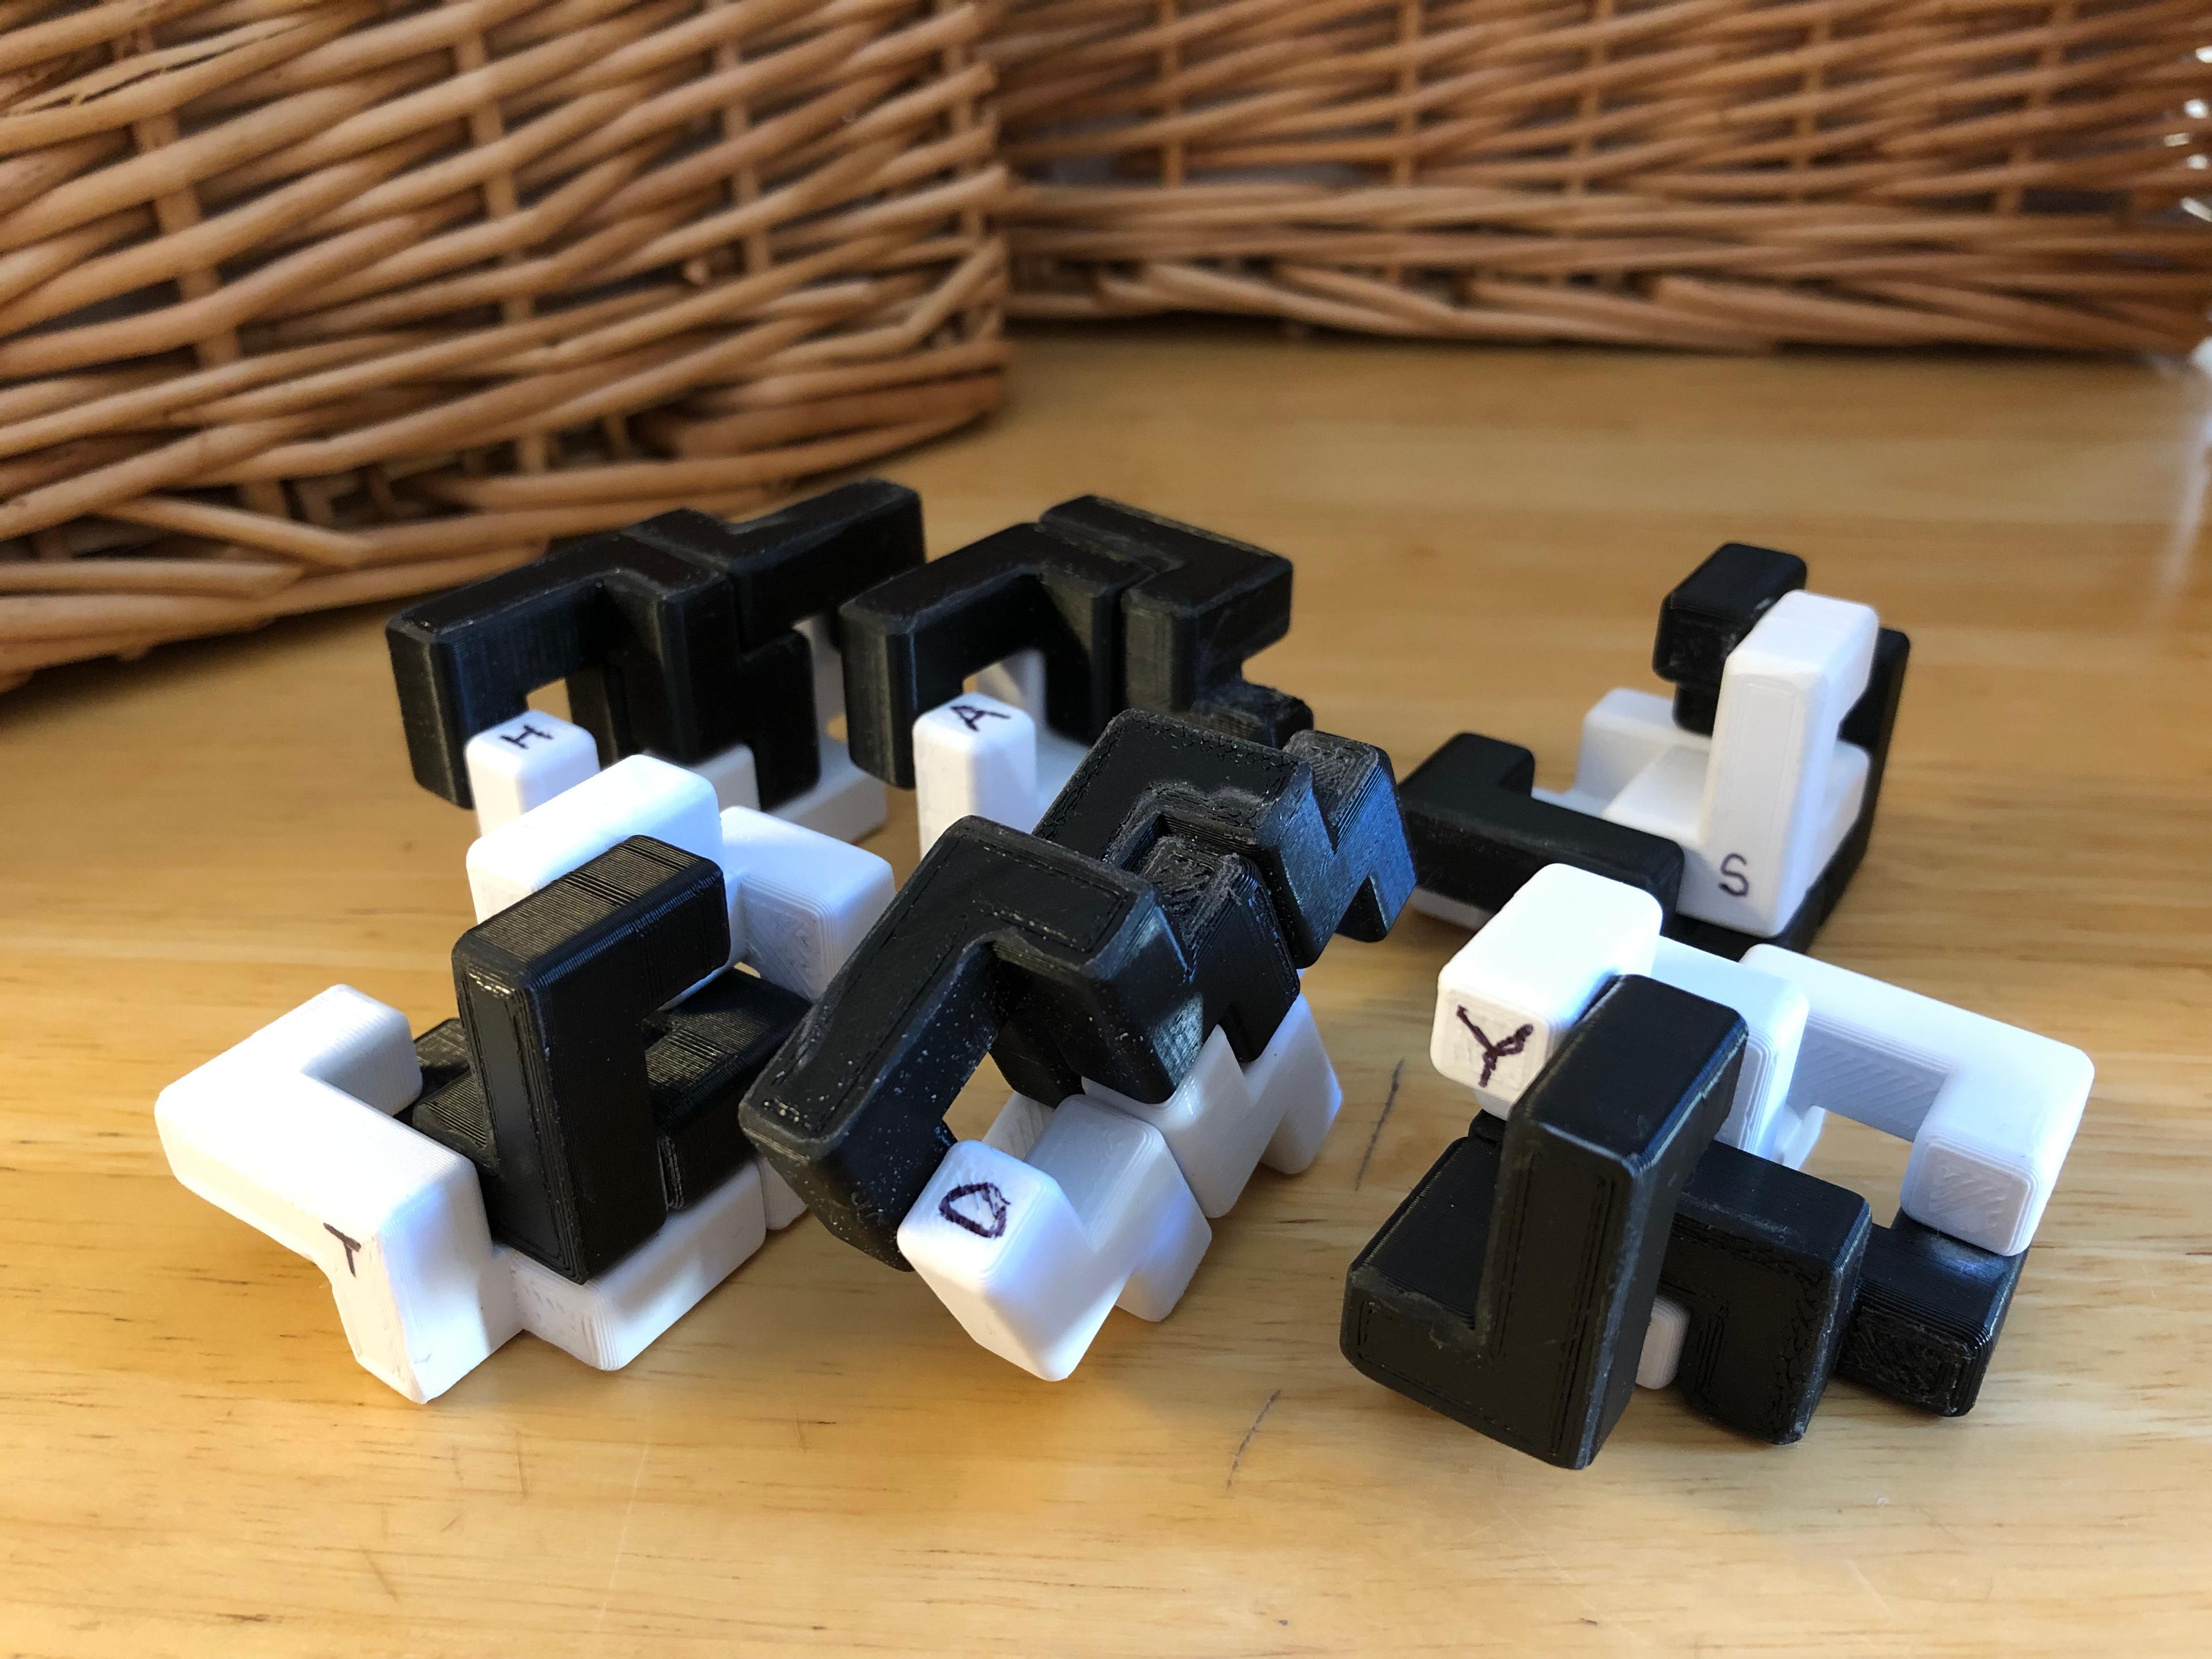 Lego Fullbring bankai Zangetsu (Bleach) - 3D model by Rhys does 3dprinting  on Thangs